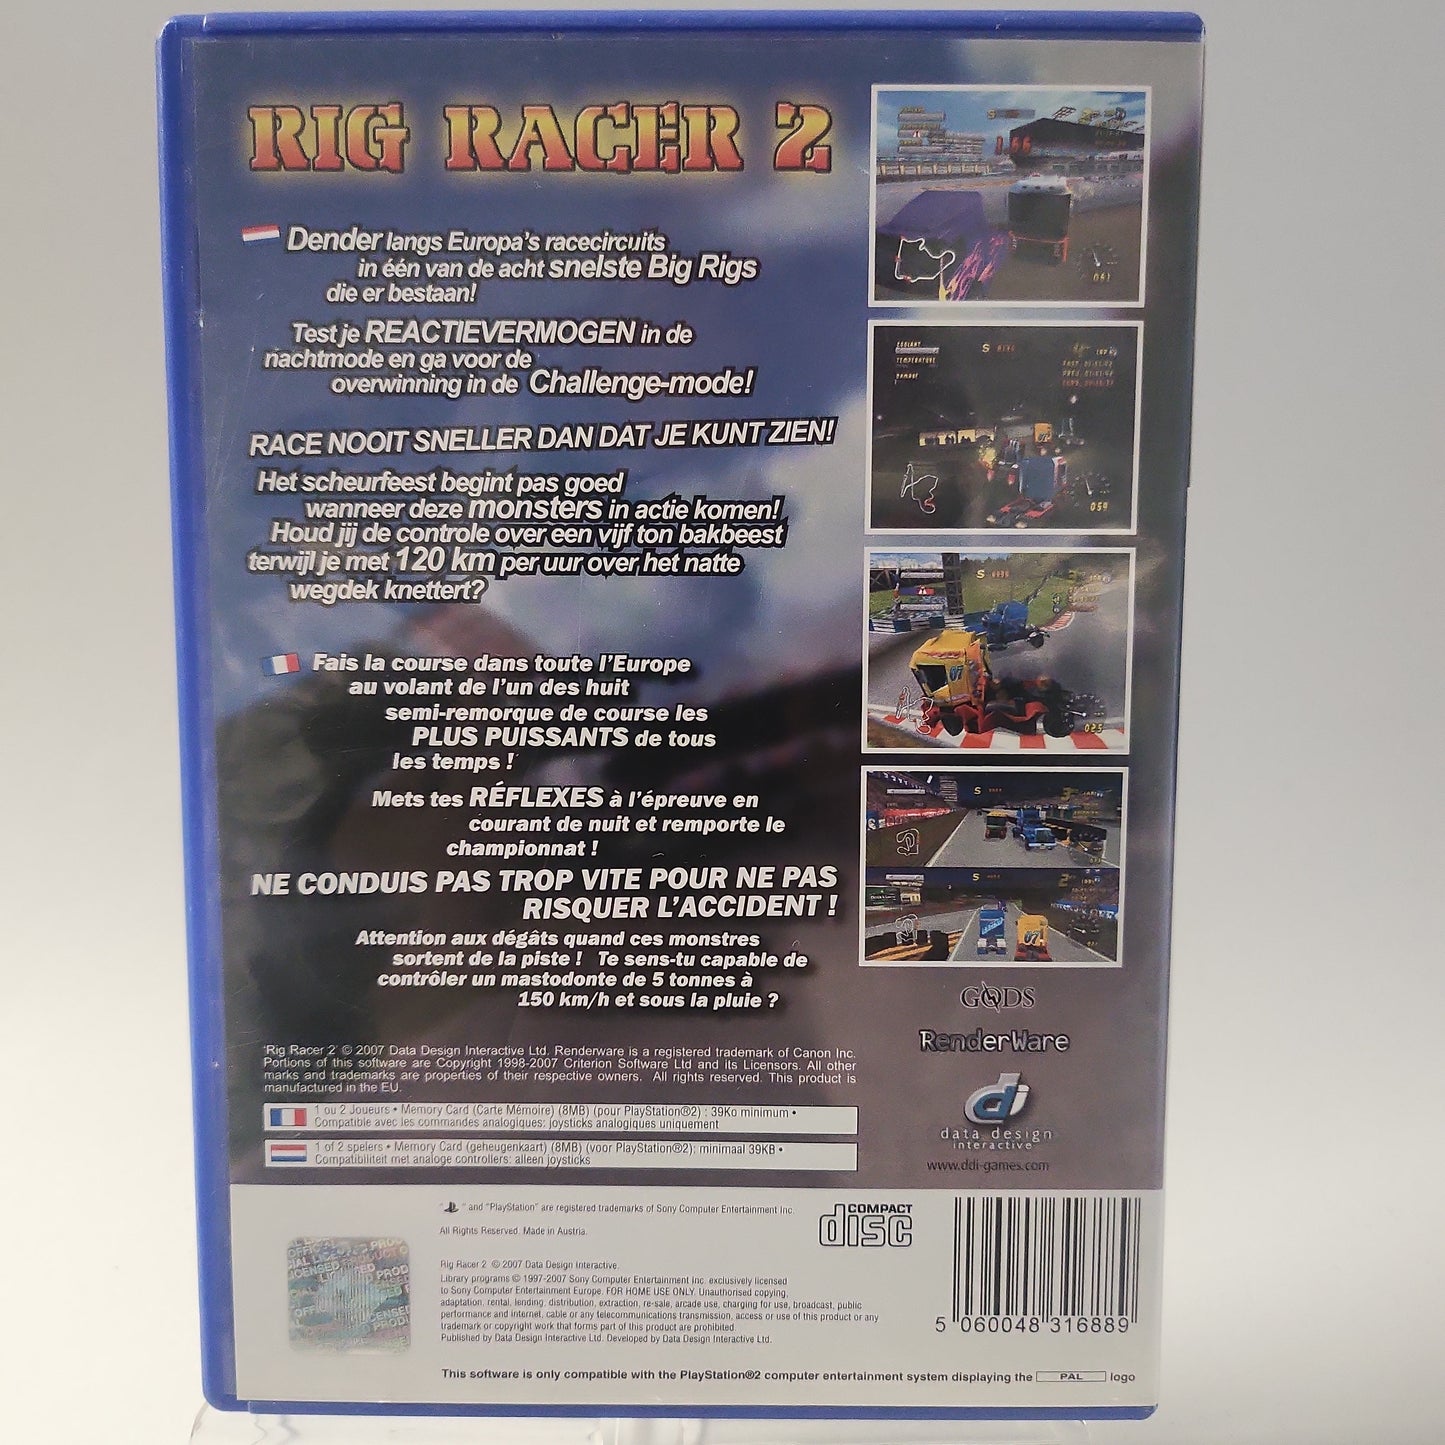 Rig Racer 2 Playstation 2